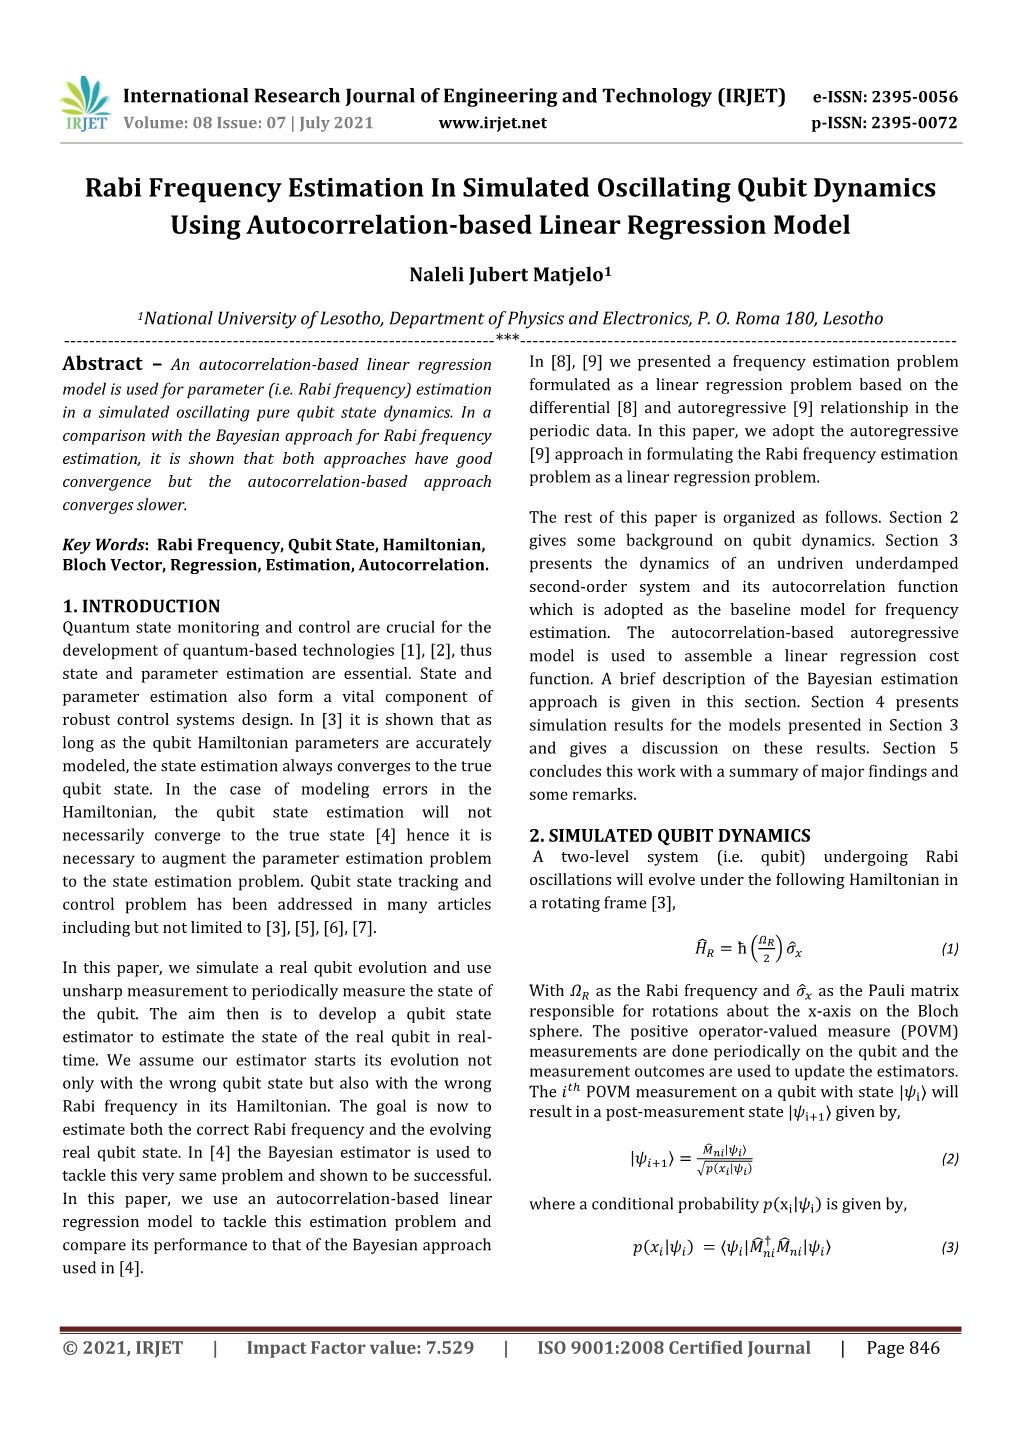 Rabi Frequency Estimation in Simulated Oscillating Qubit Dynamics Using Autocorrelation-Based Linear Regression Model